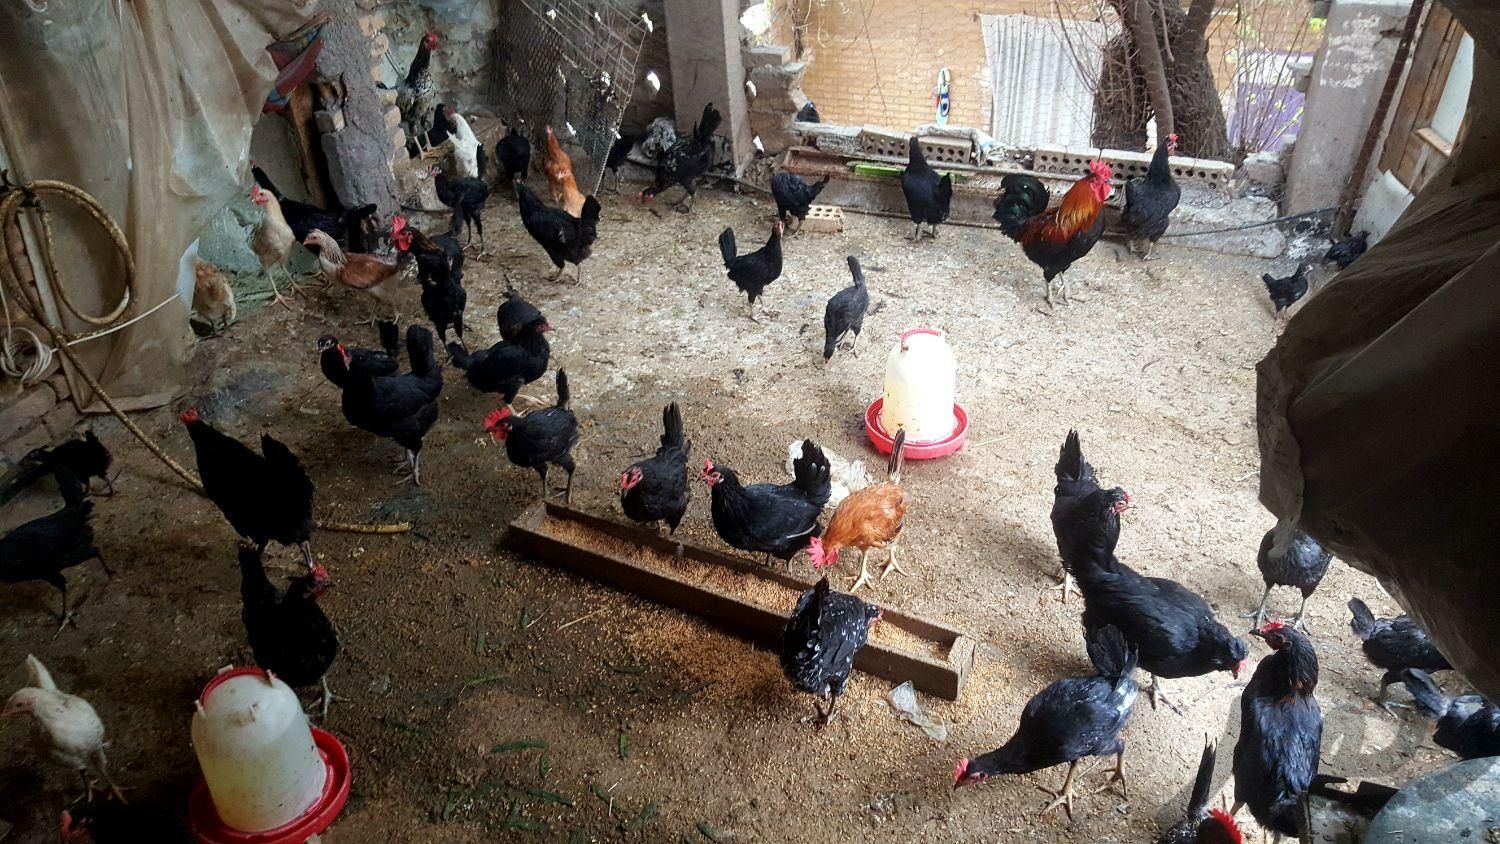 مرغ و خروس عربی اصیل|حیوانات مزرعه|اهواز, لشکرآباد|دیوار